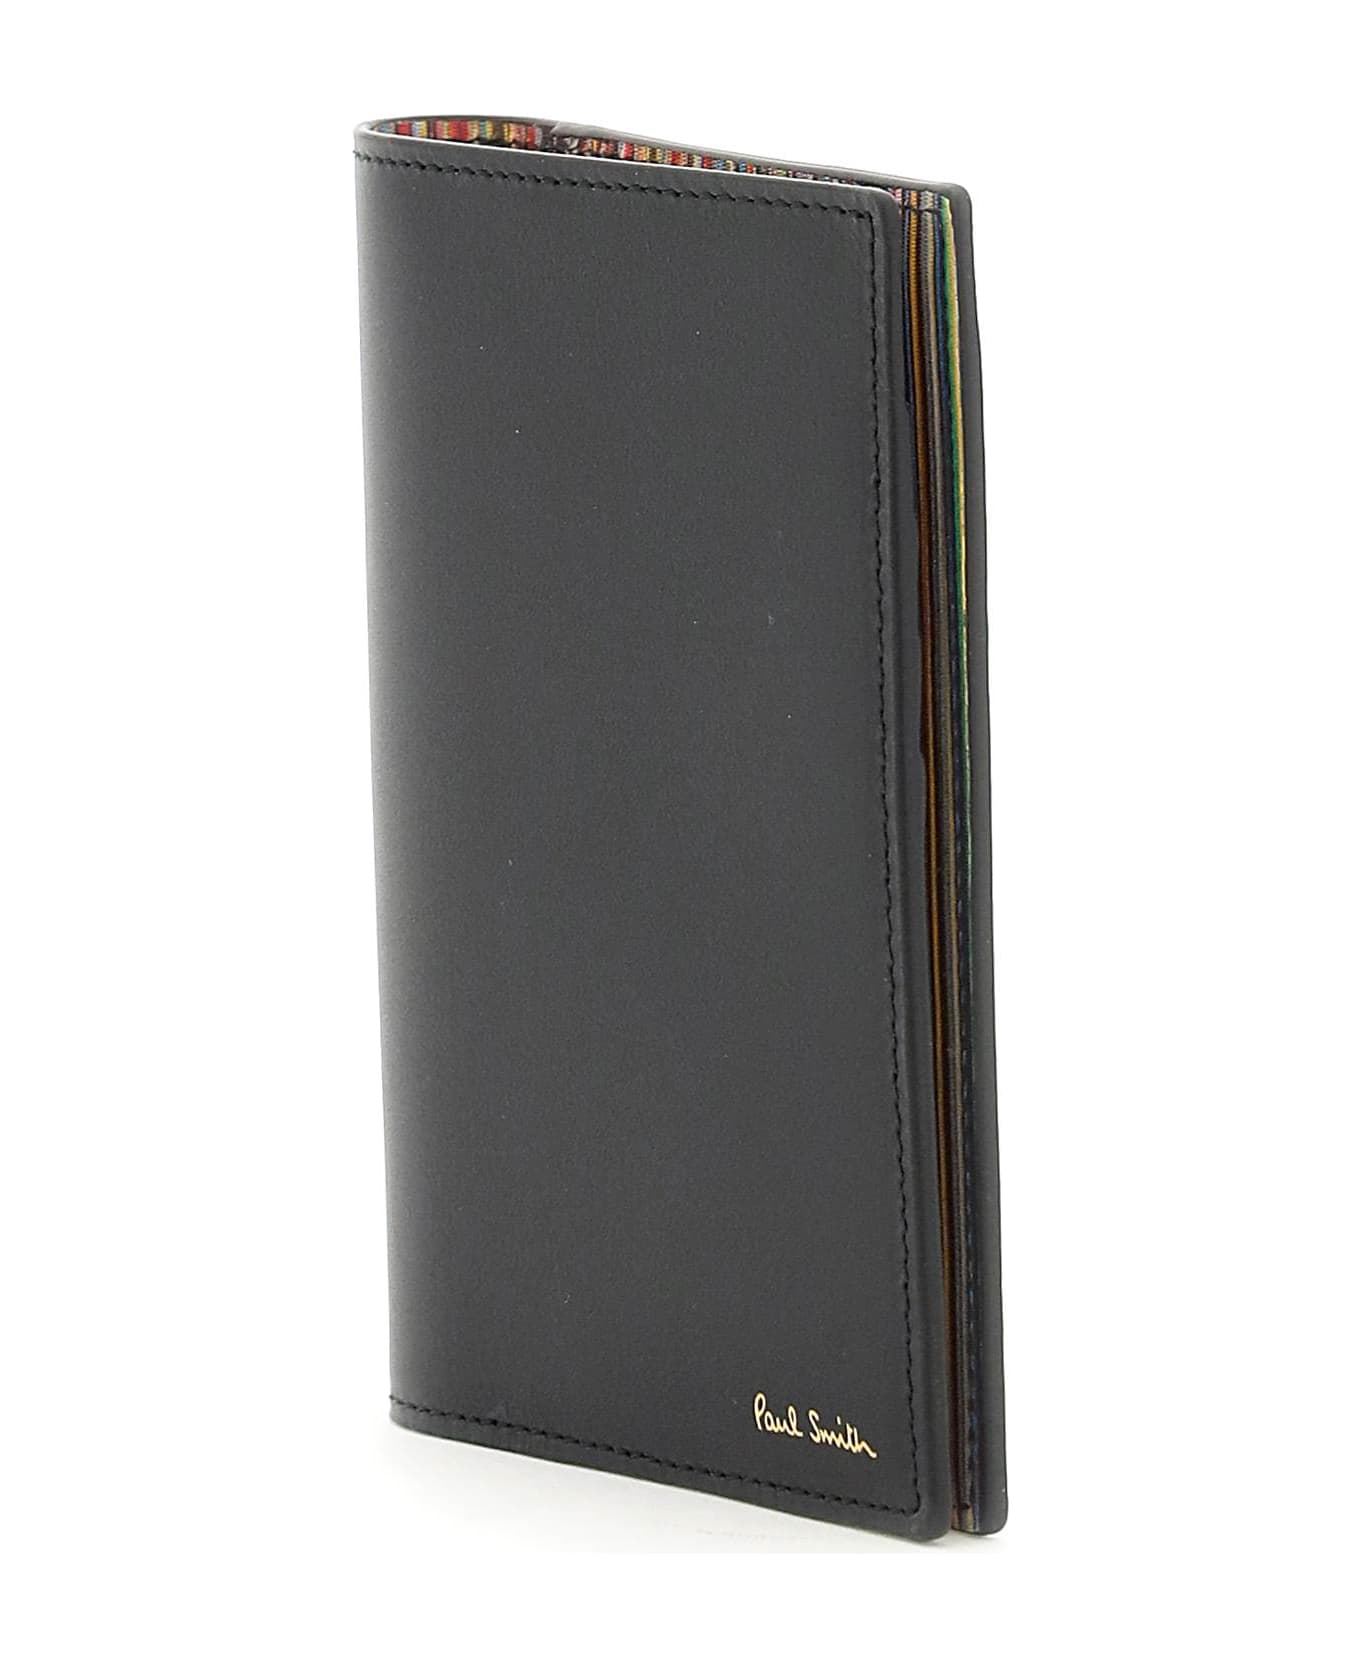 Paul Smith Leather Passport Cover - Black トラベルバッグ